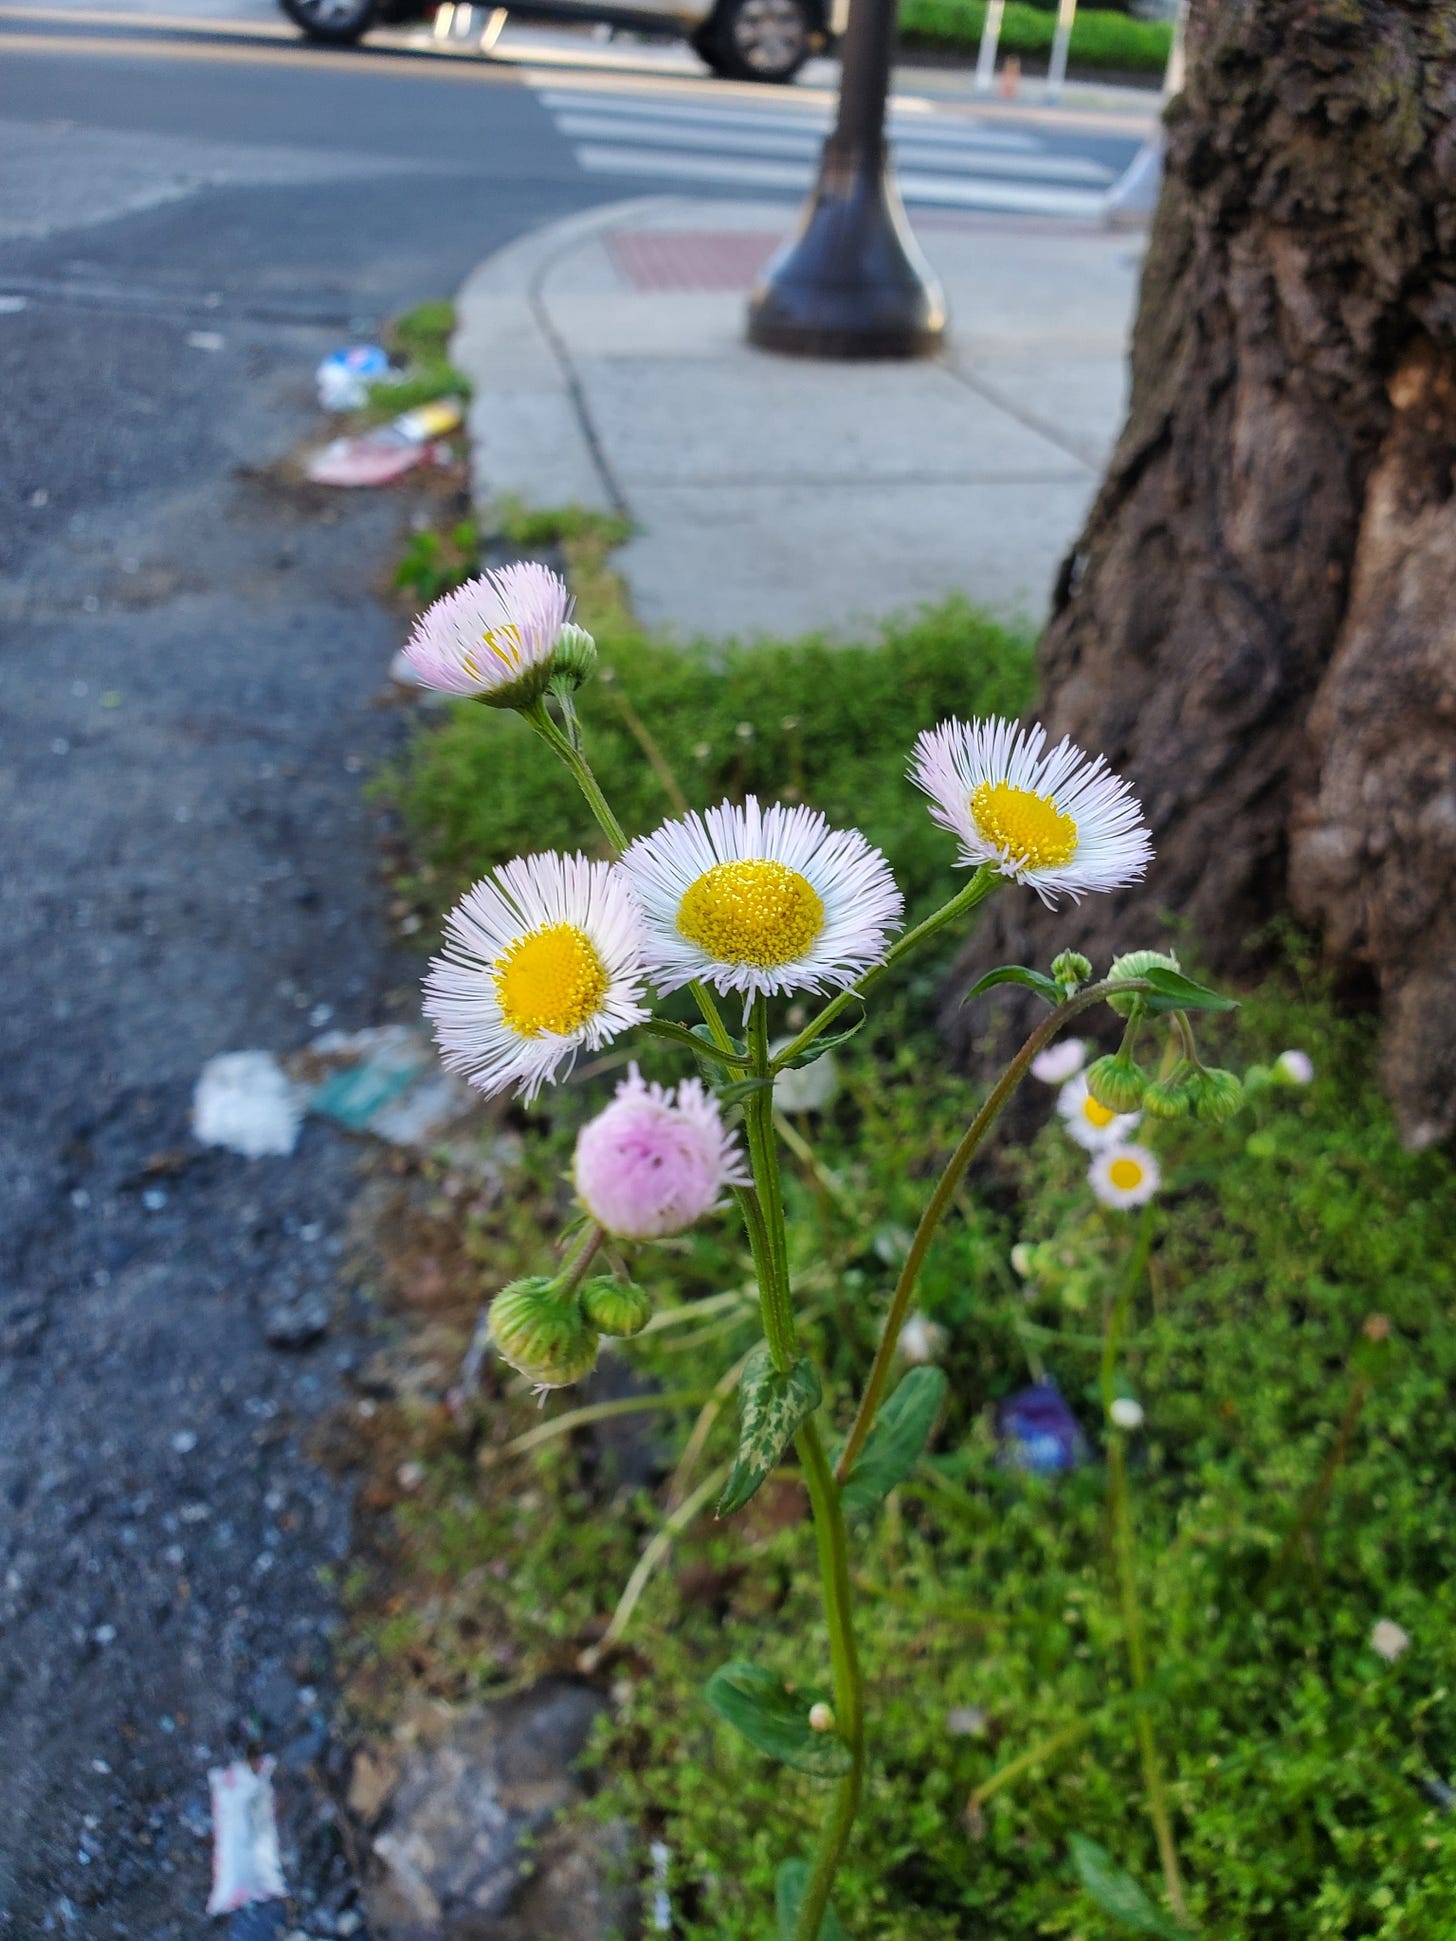 small yellow-centered, white/pink daisies, a.k.a. Philadelphia fleabanes